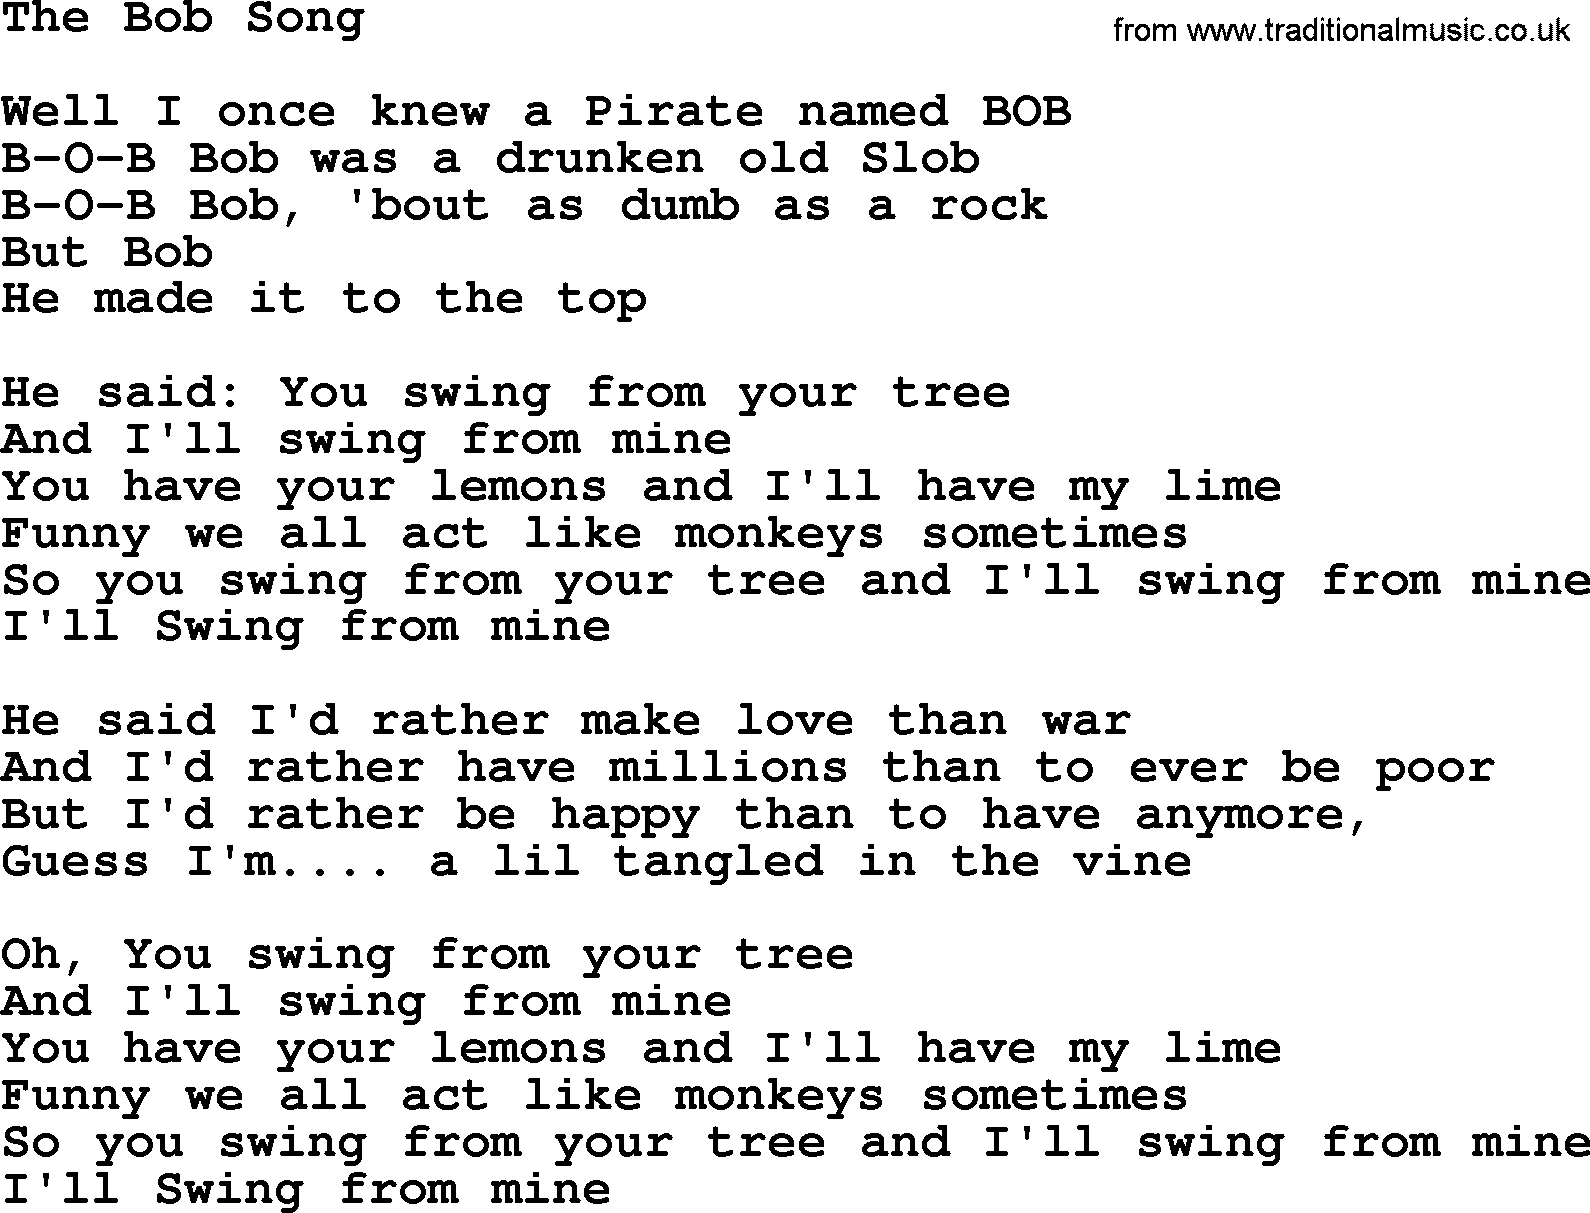 Willie Nelson song: The Bob Song lyrics